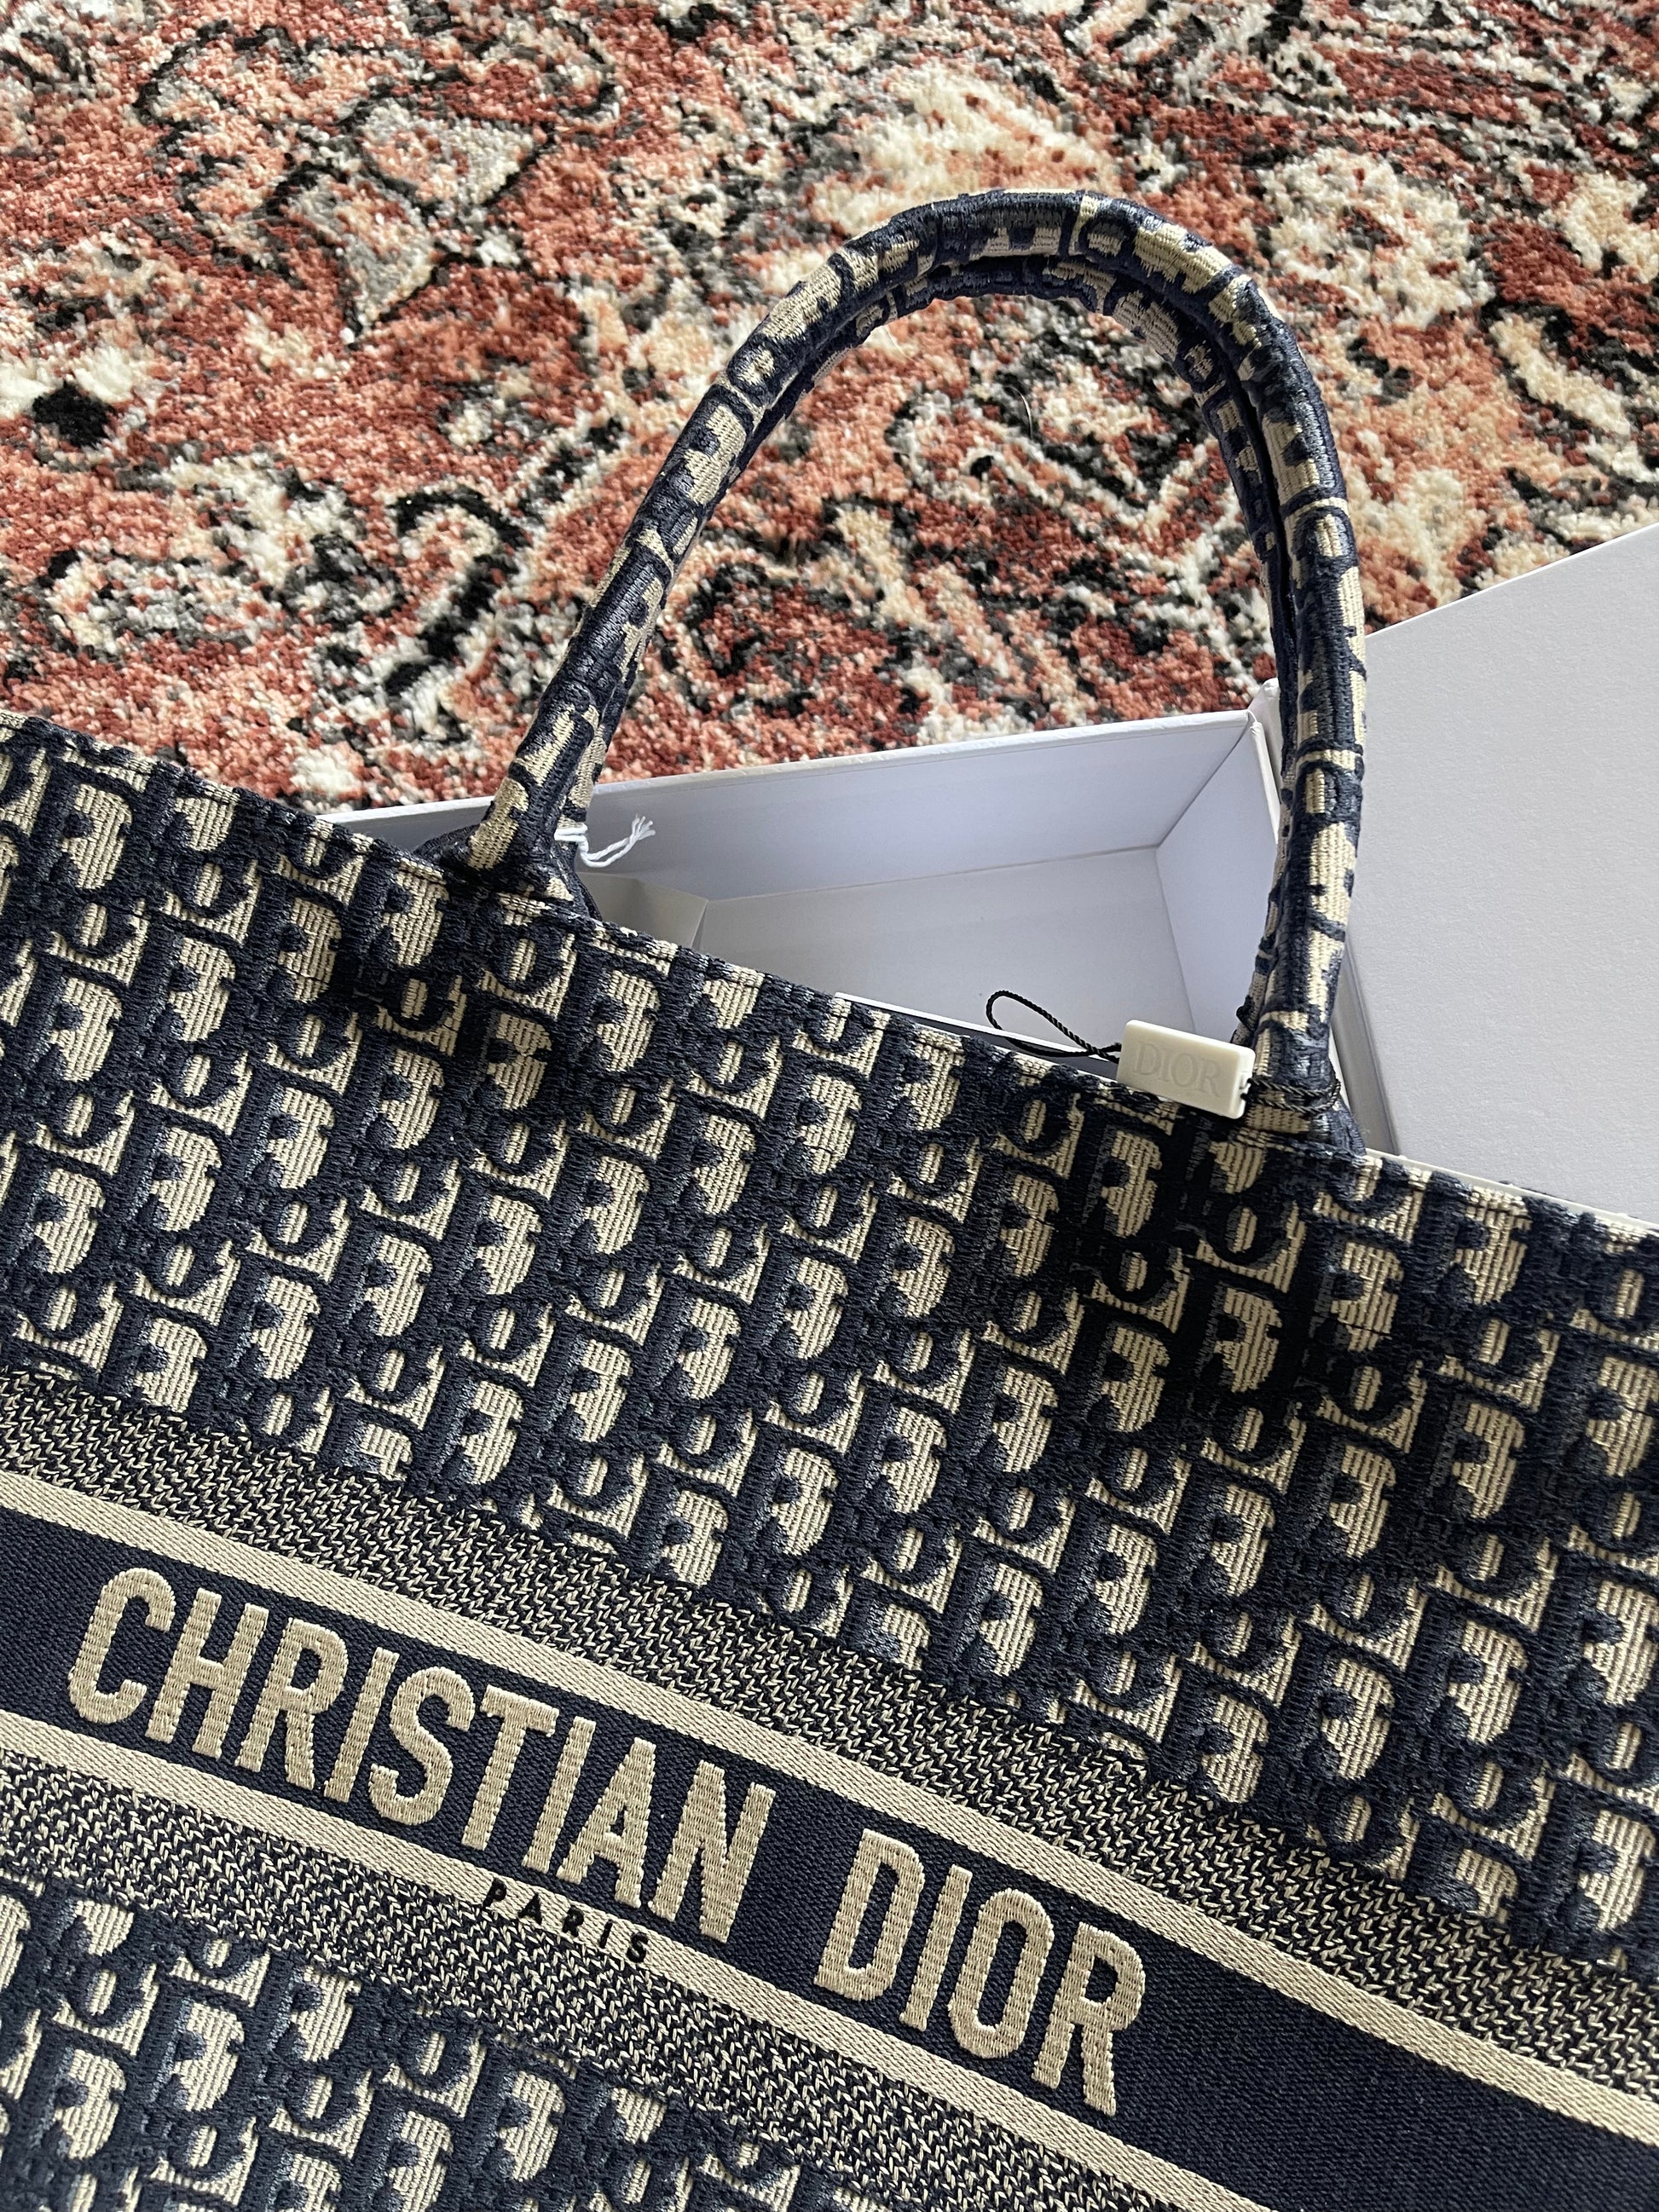 Christian Dior Large Oblique Book Tote